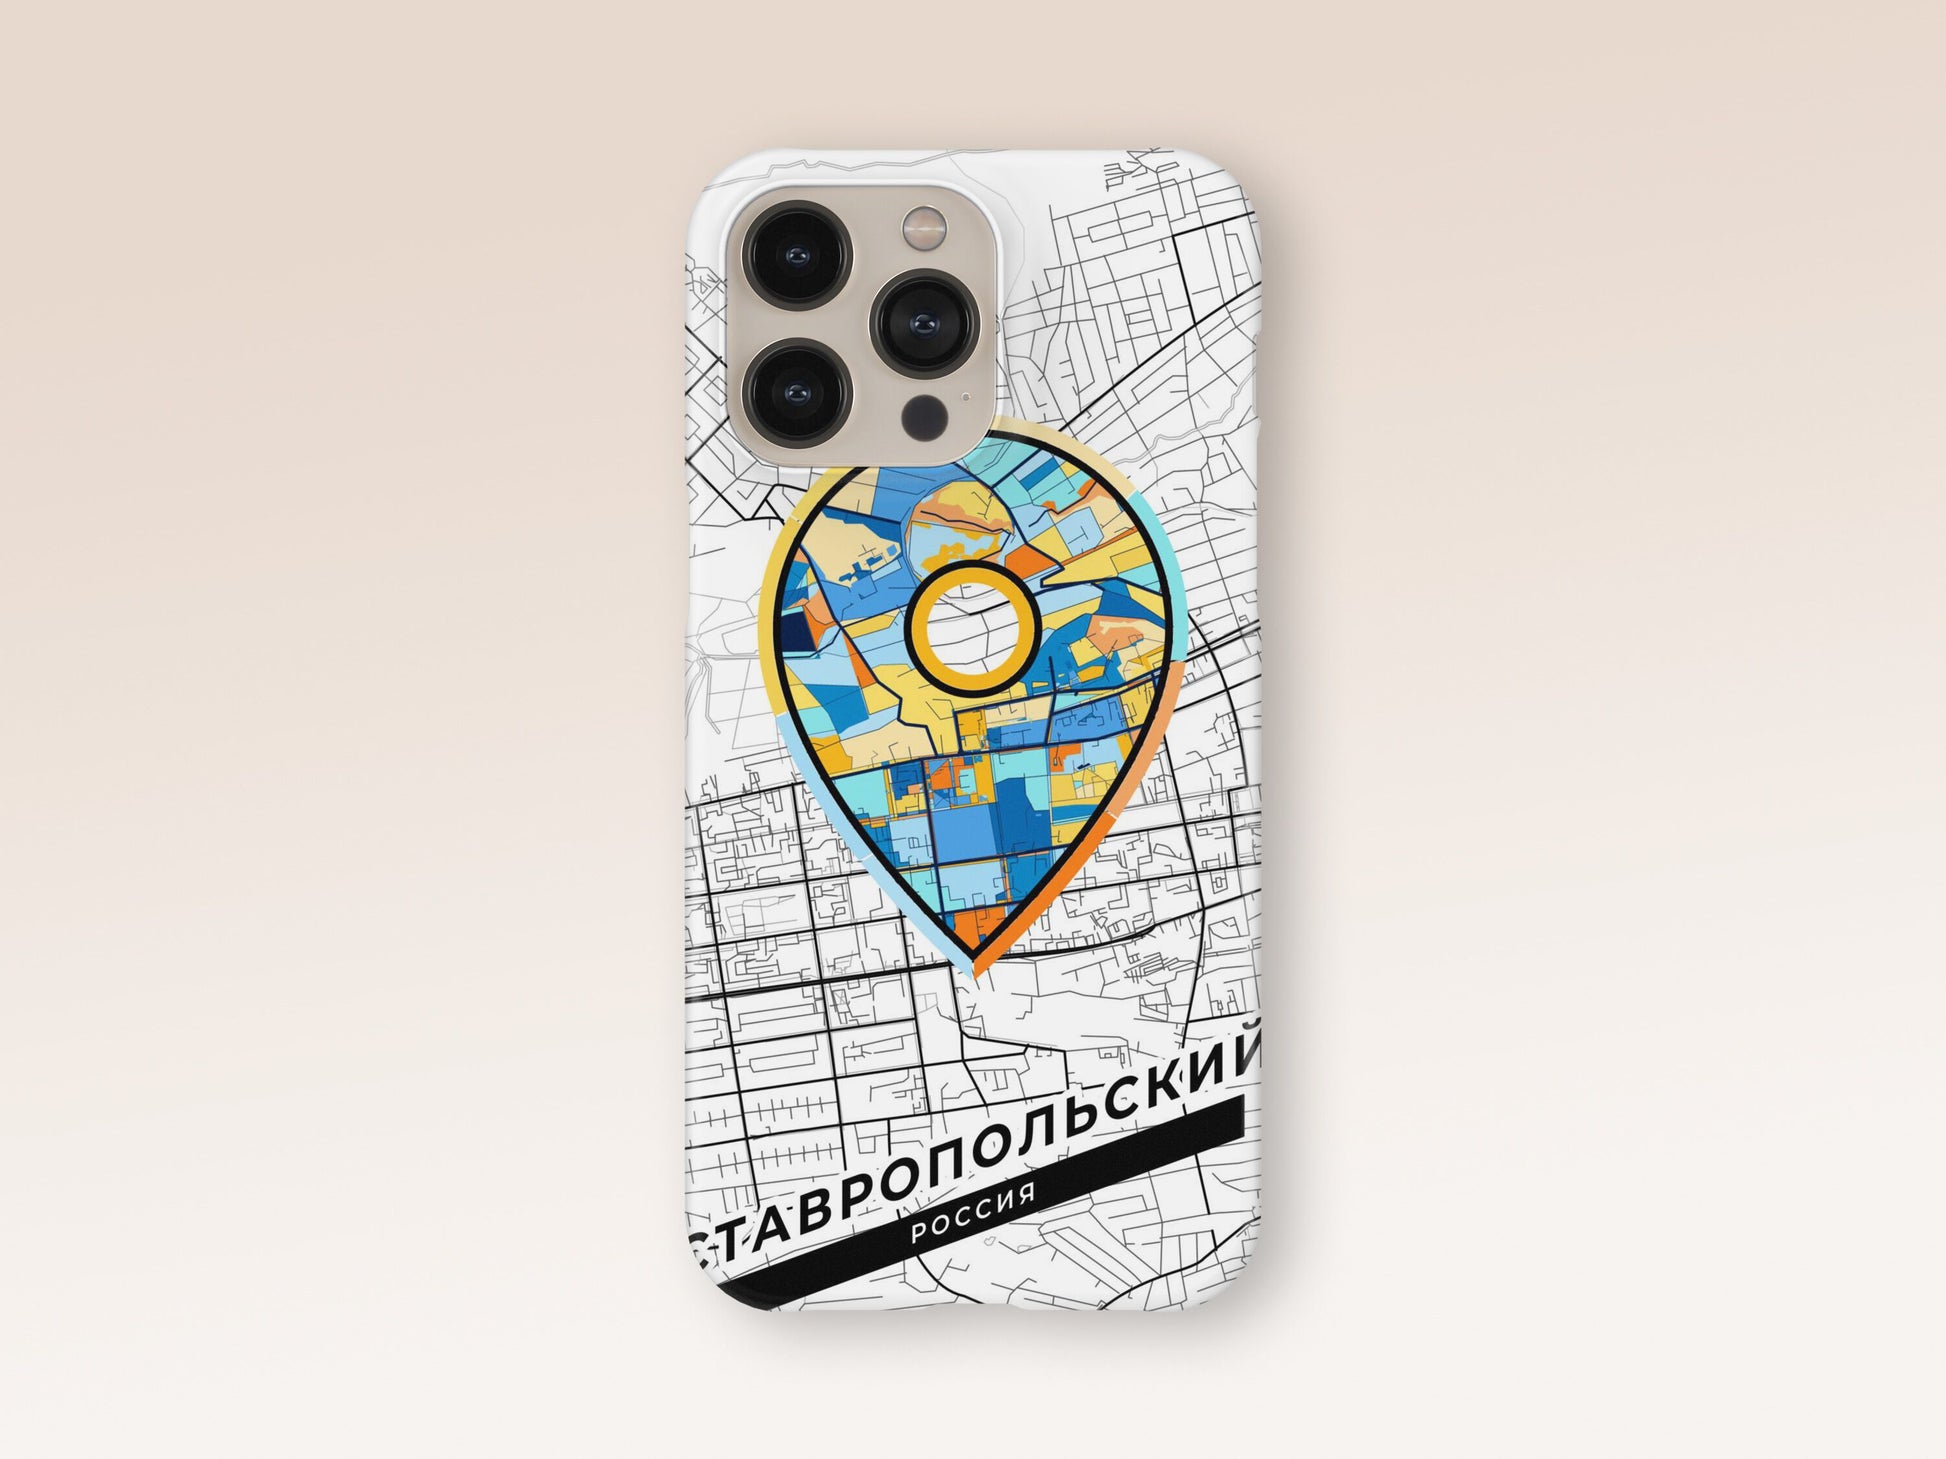 Stavropol Russia slim phone case with colorful icon 1